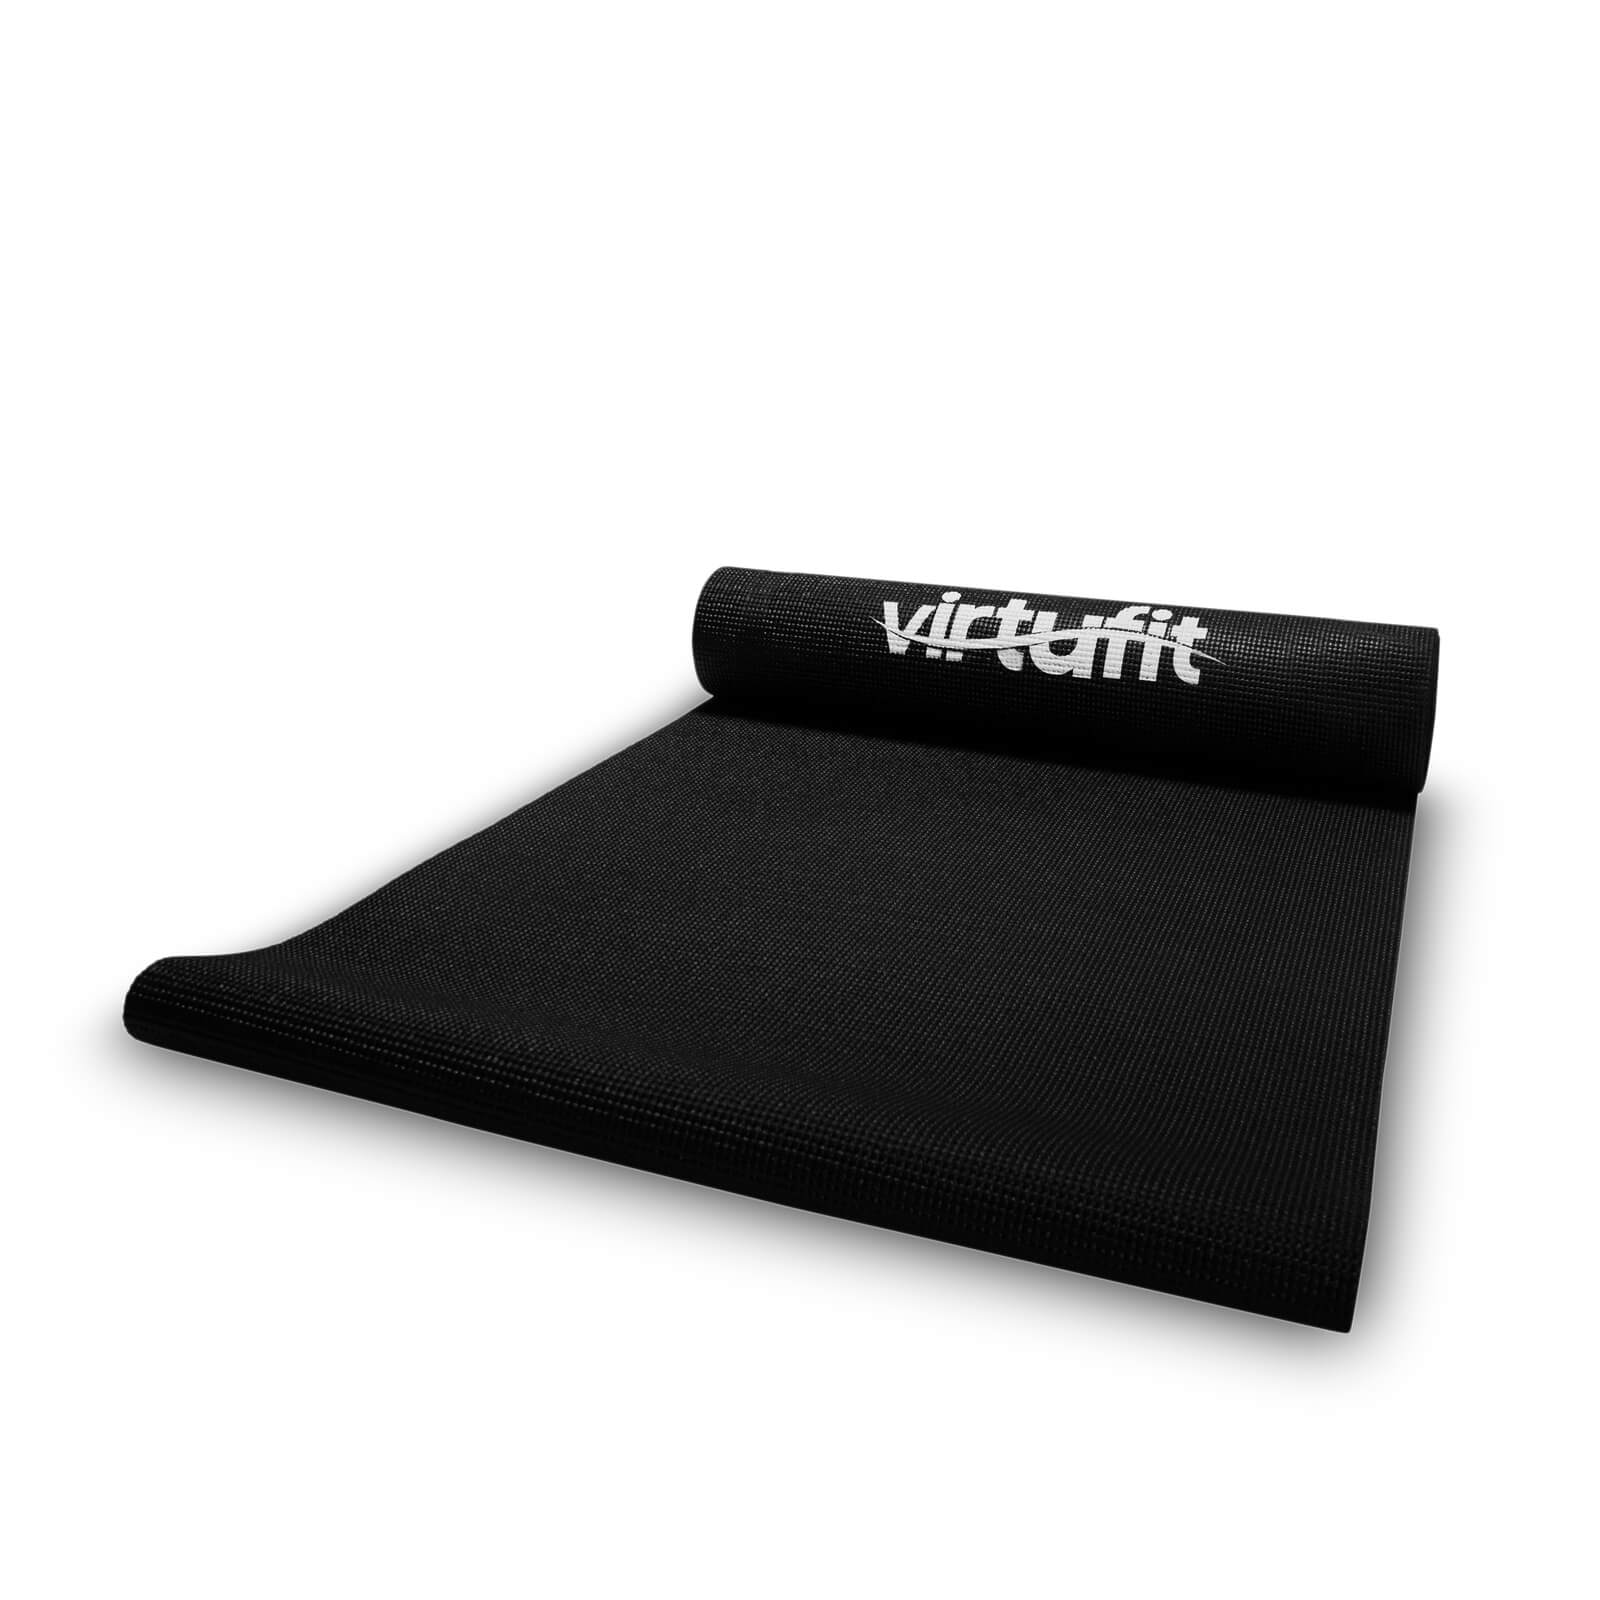 Sjekke Yogamatte 183 x 61 cm, VirtuFit hos SportGymButikken.no